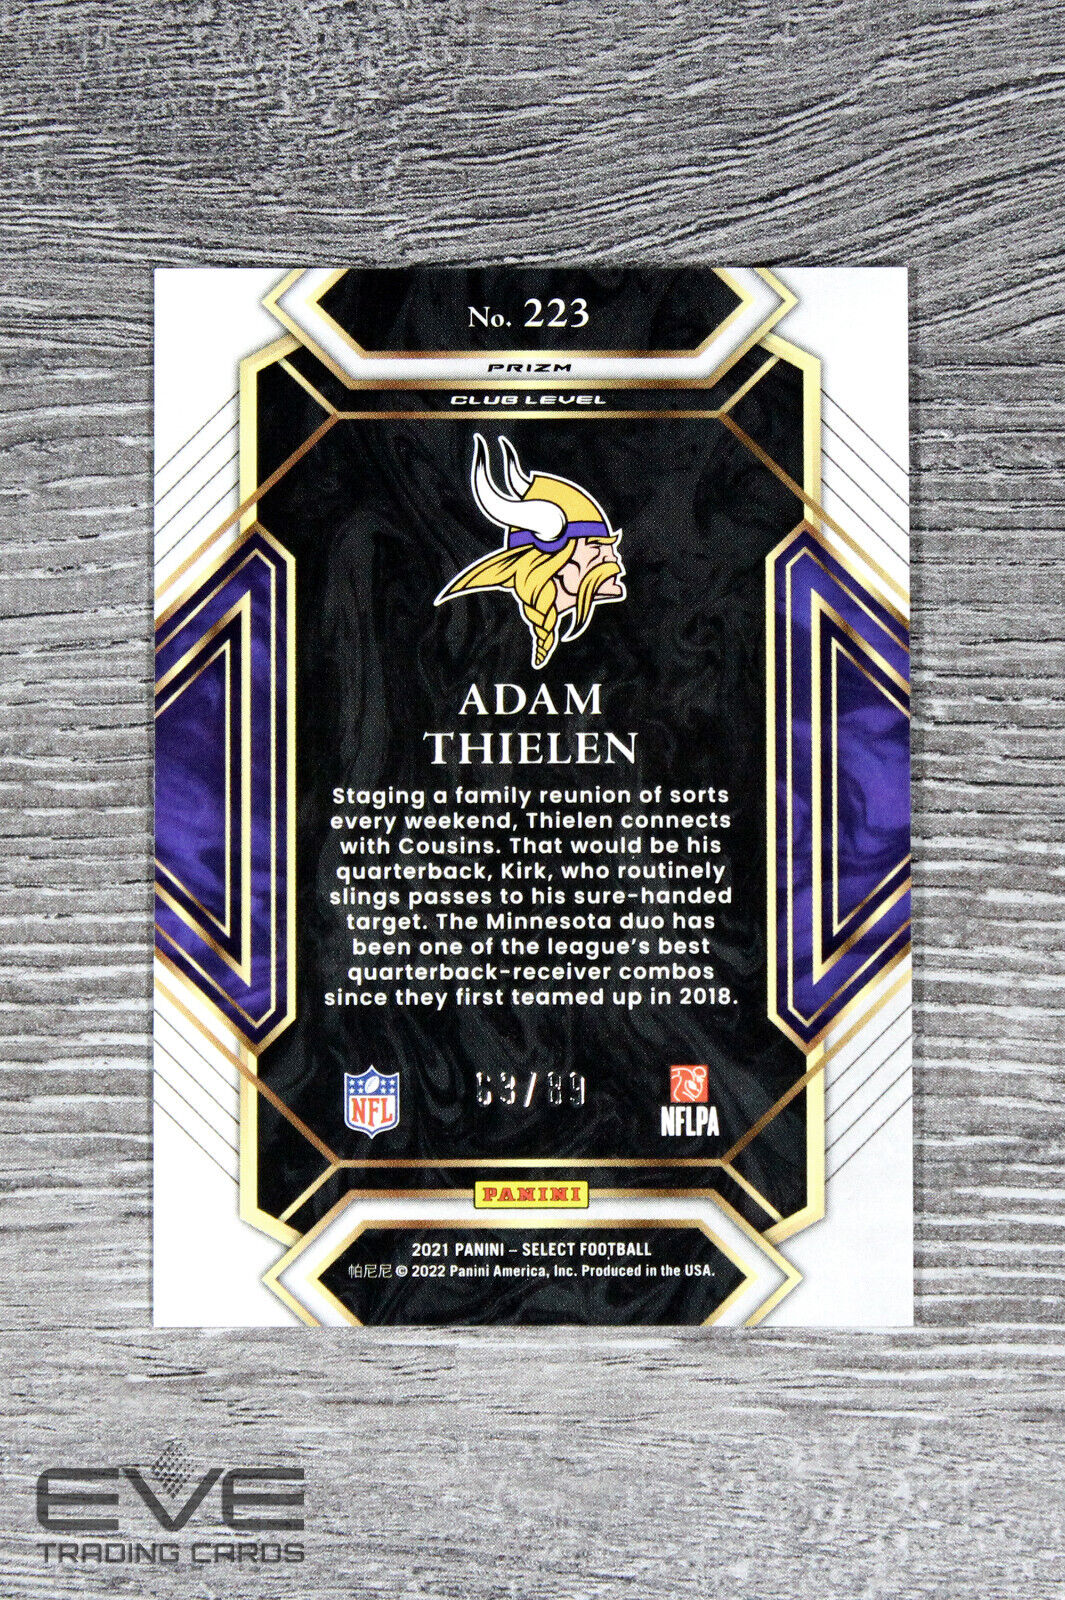 2021 Panini Select NFL Card #223 Adam Thielen Dragon Scale Prizm /89 NM/M